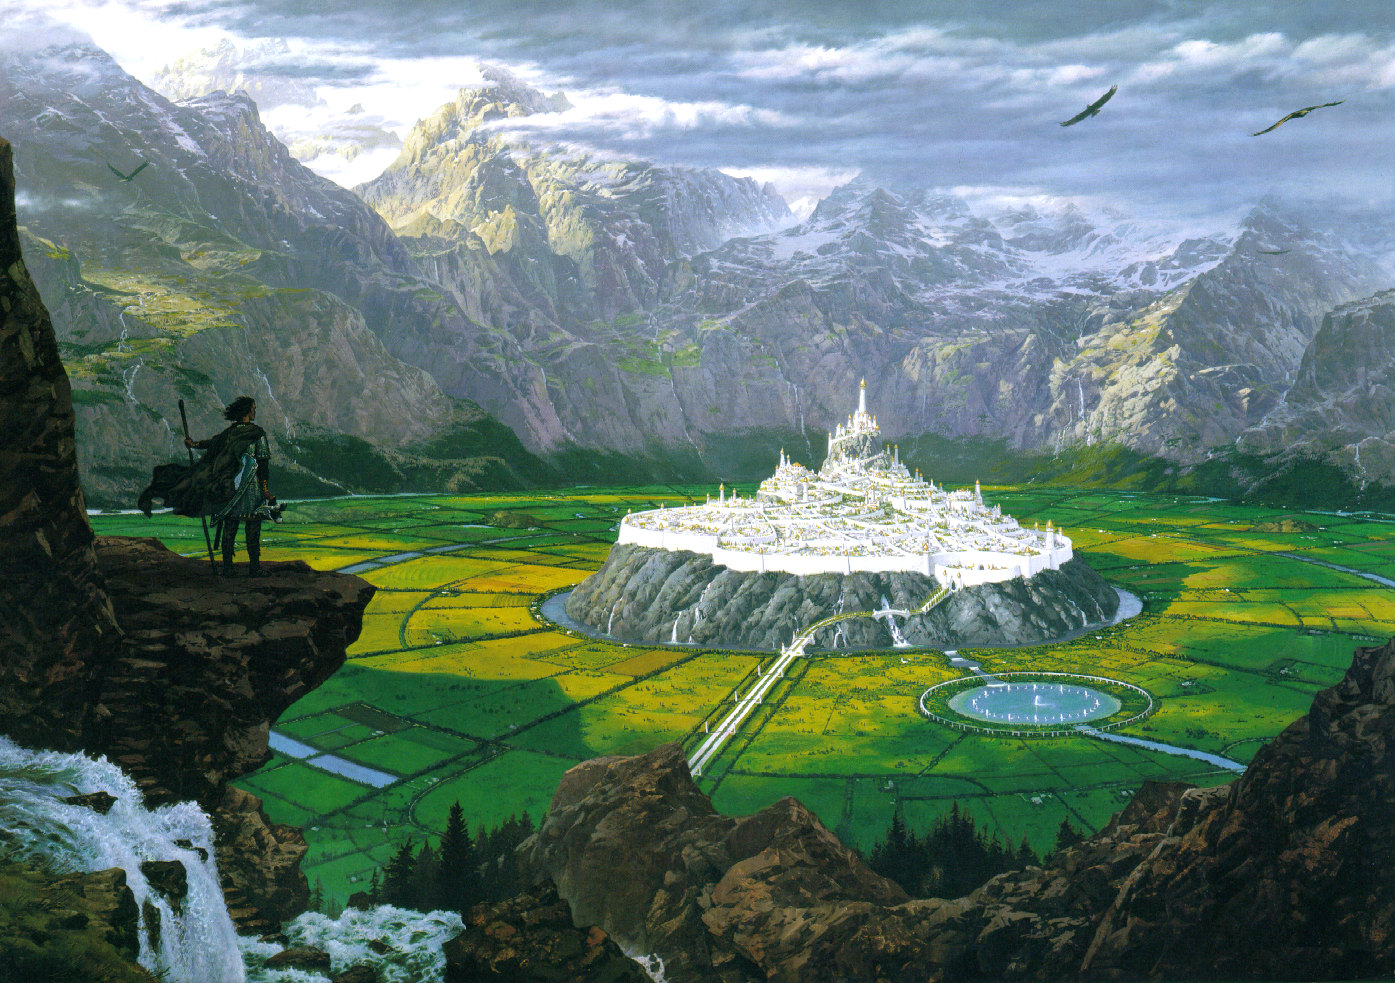 http://cinescopia.com/wp-content/uploads/2014/01/Ted_Nasmith_-_Tuor_Reaches_the_Hidden_City_of_Gondolin.jpg